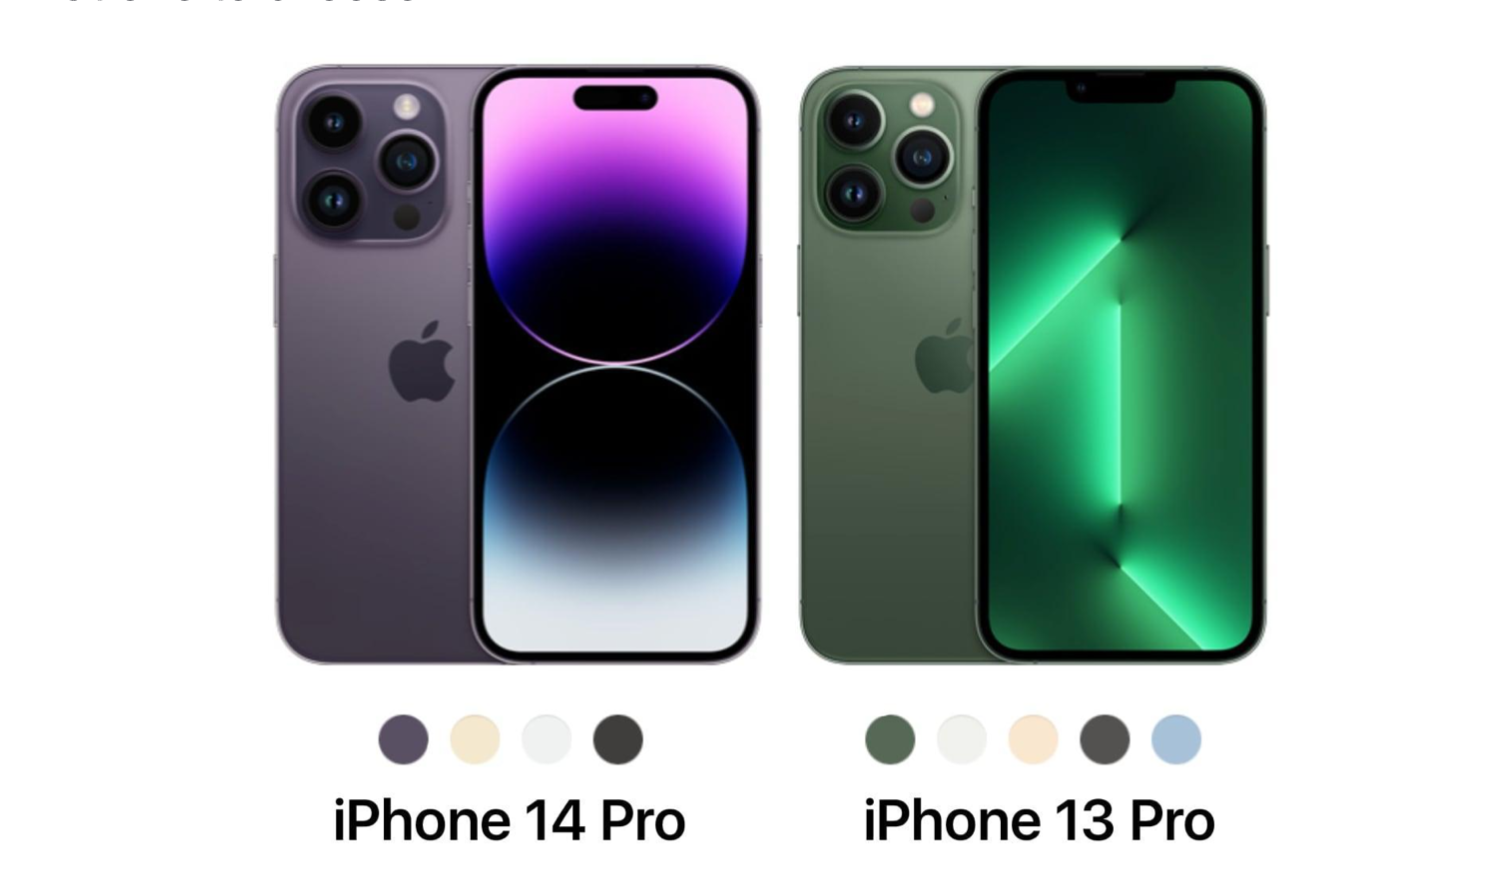 iPhone 13 Pro vs iPhone 14 Pro